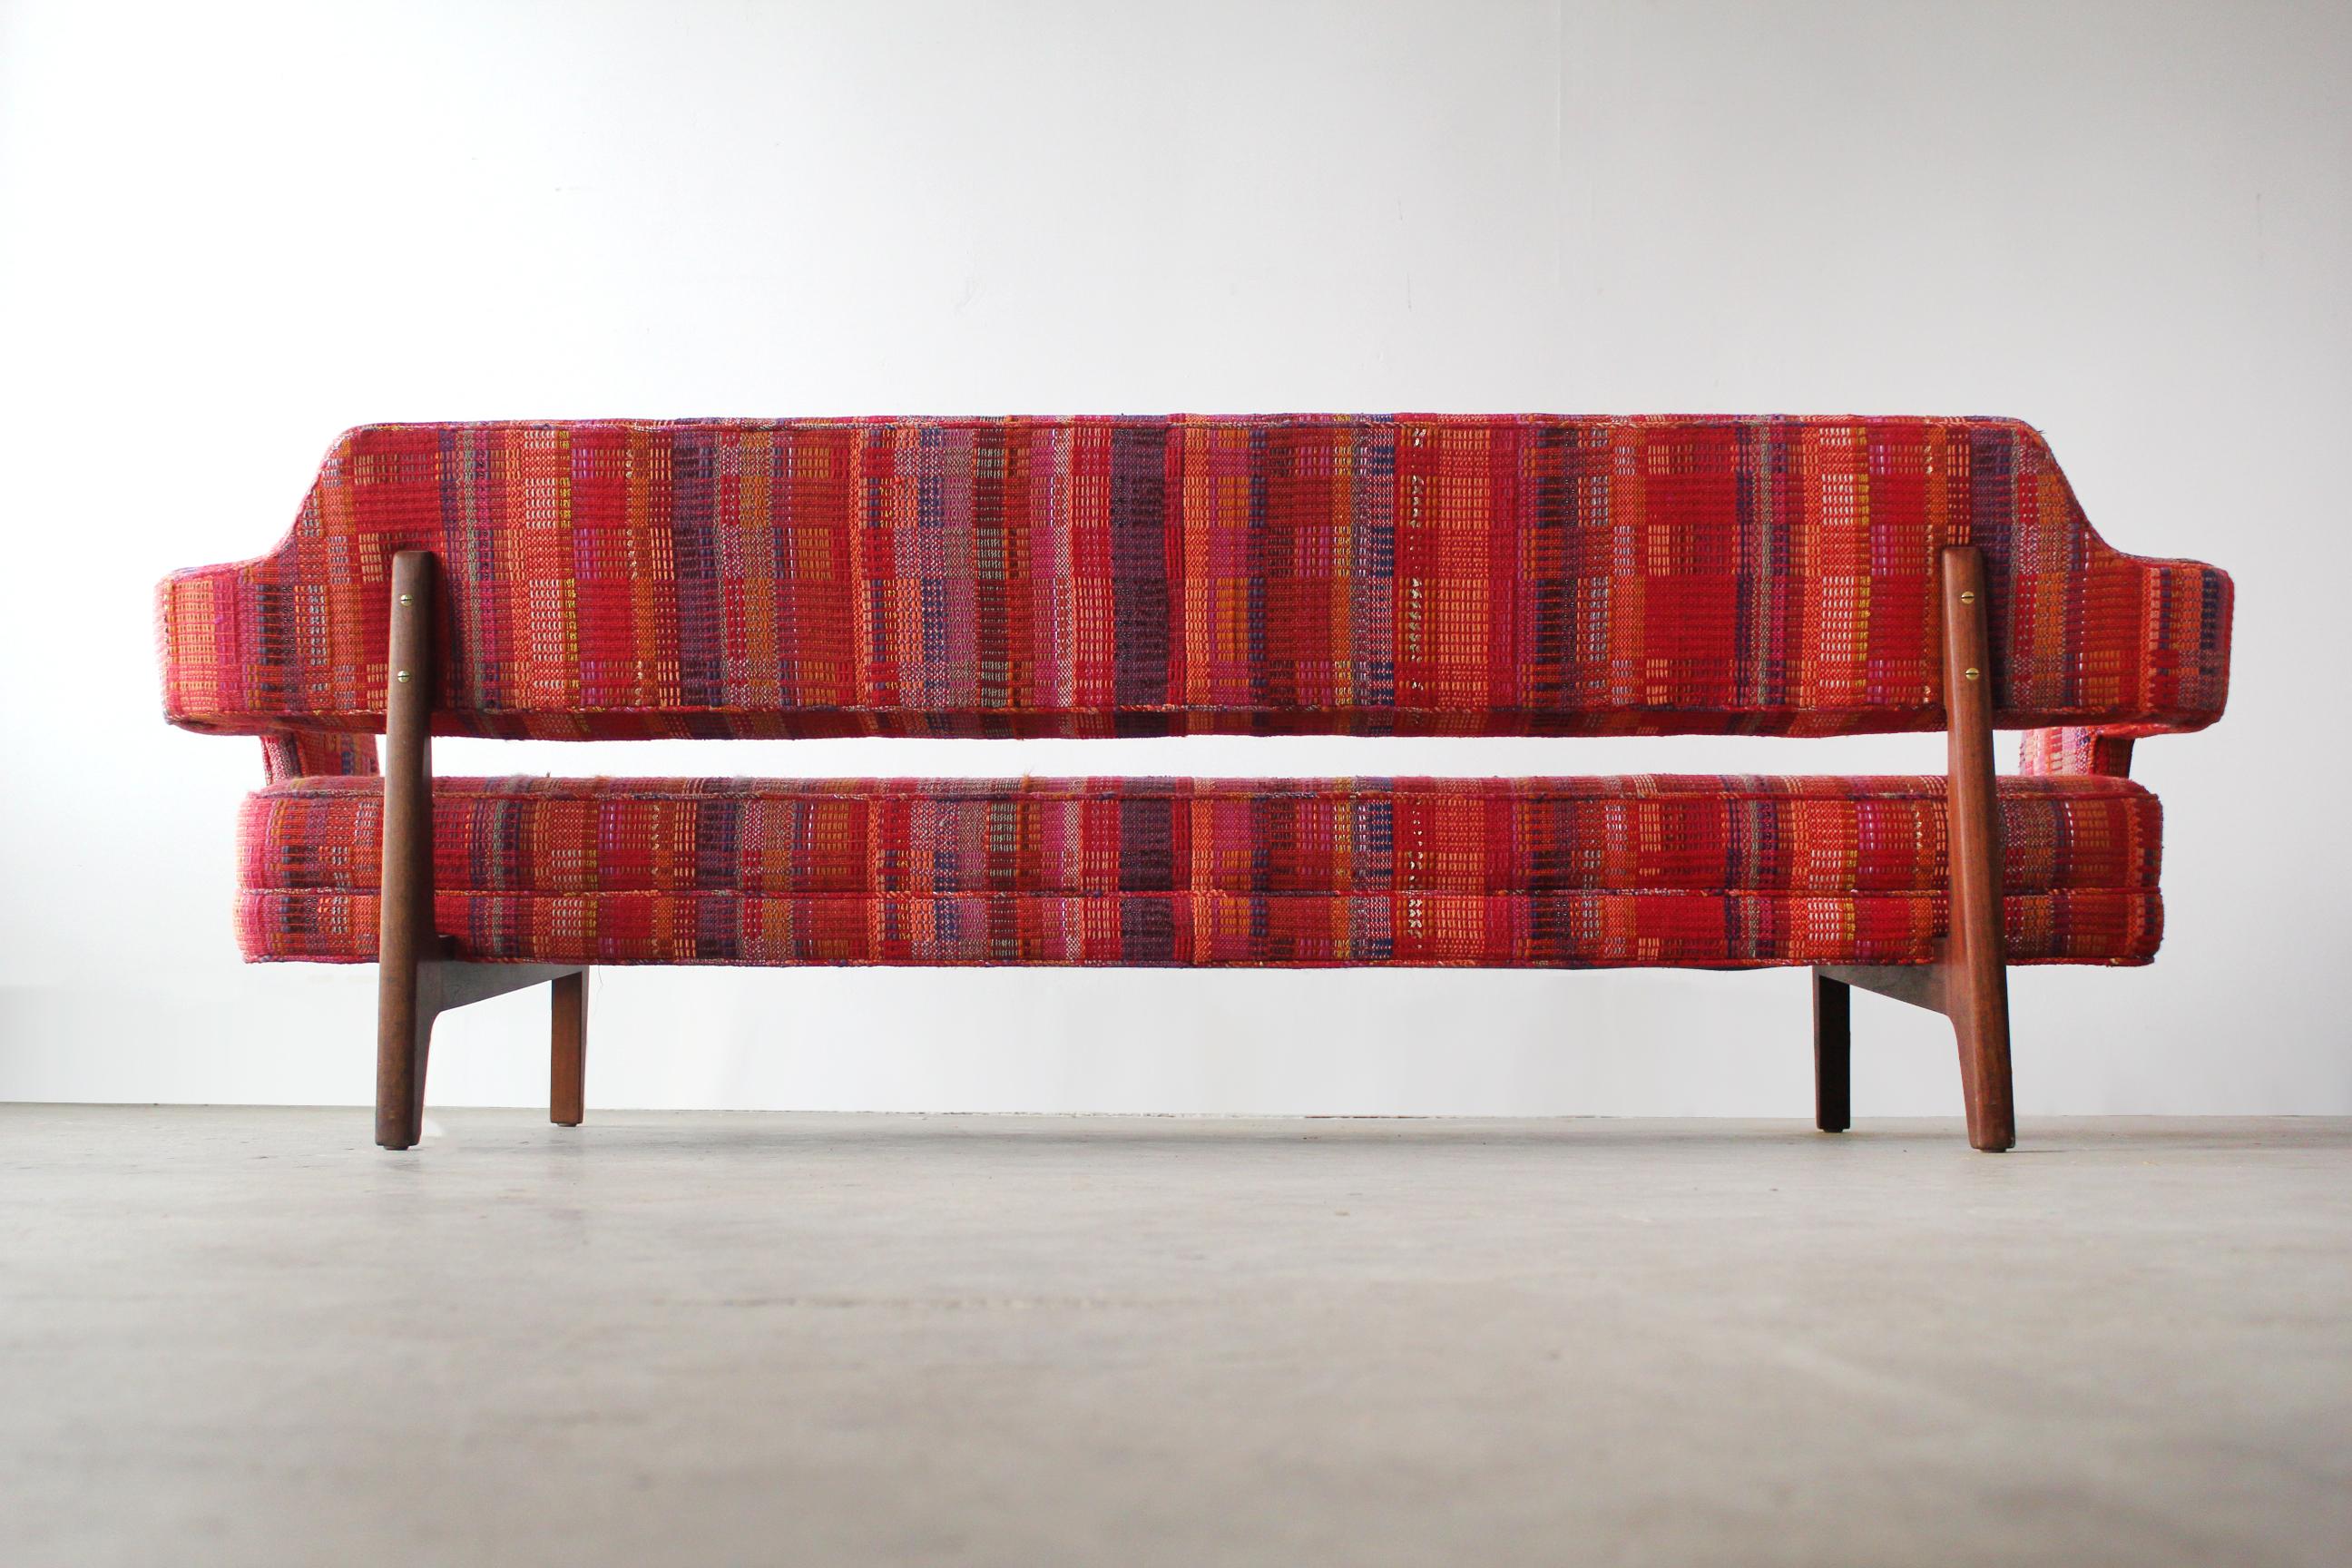 20th Century Edward Wormley Open Back Sofas for Dunbar Original Dorothy Liebes Woven Textile